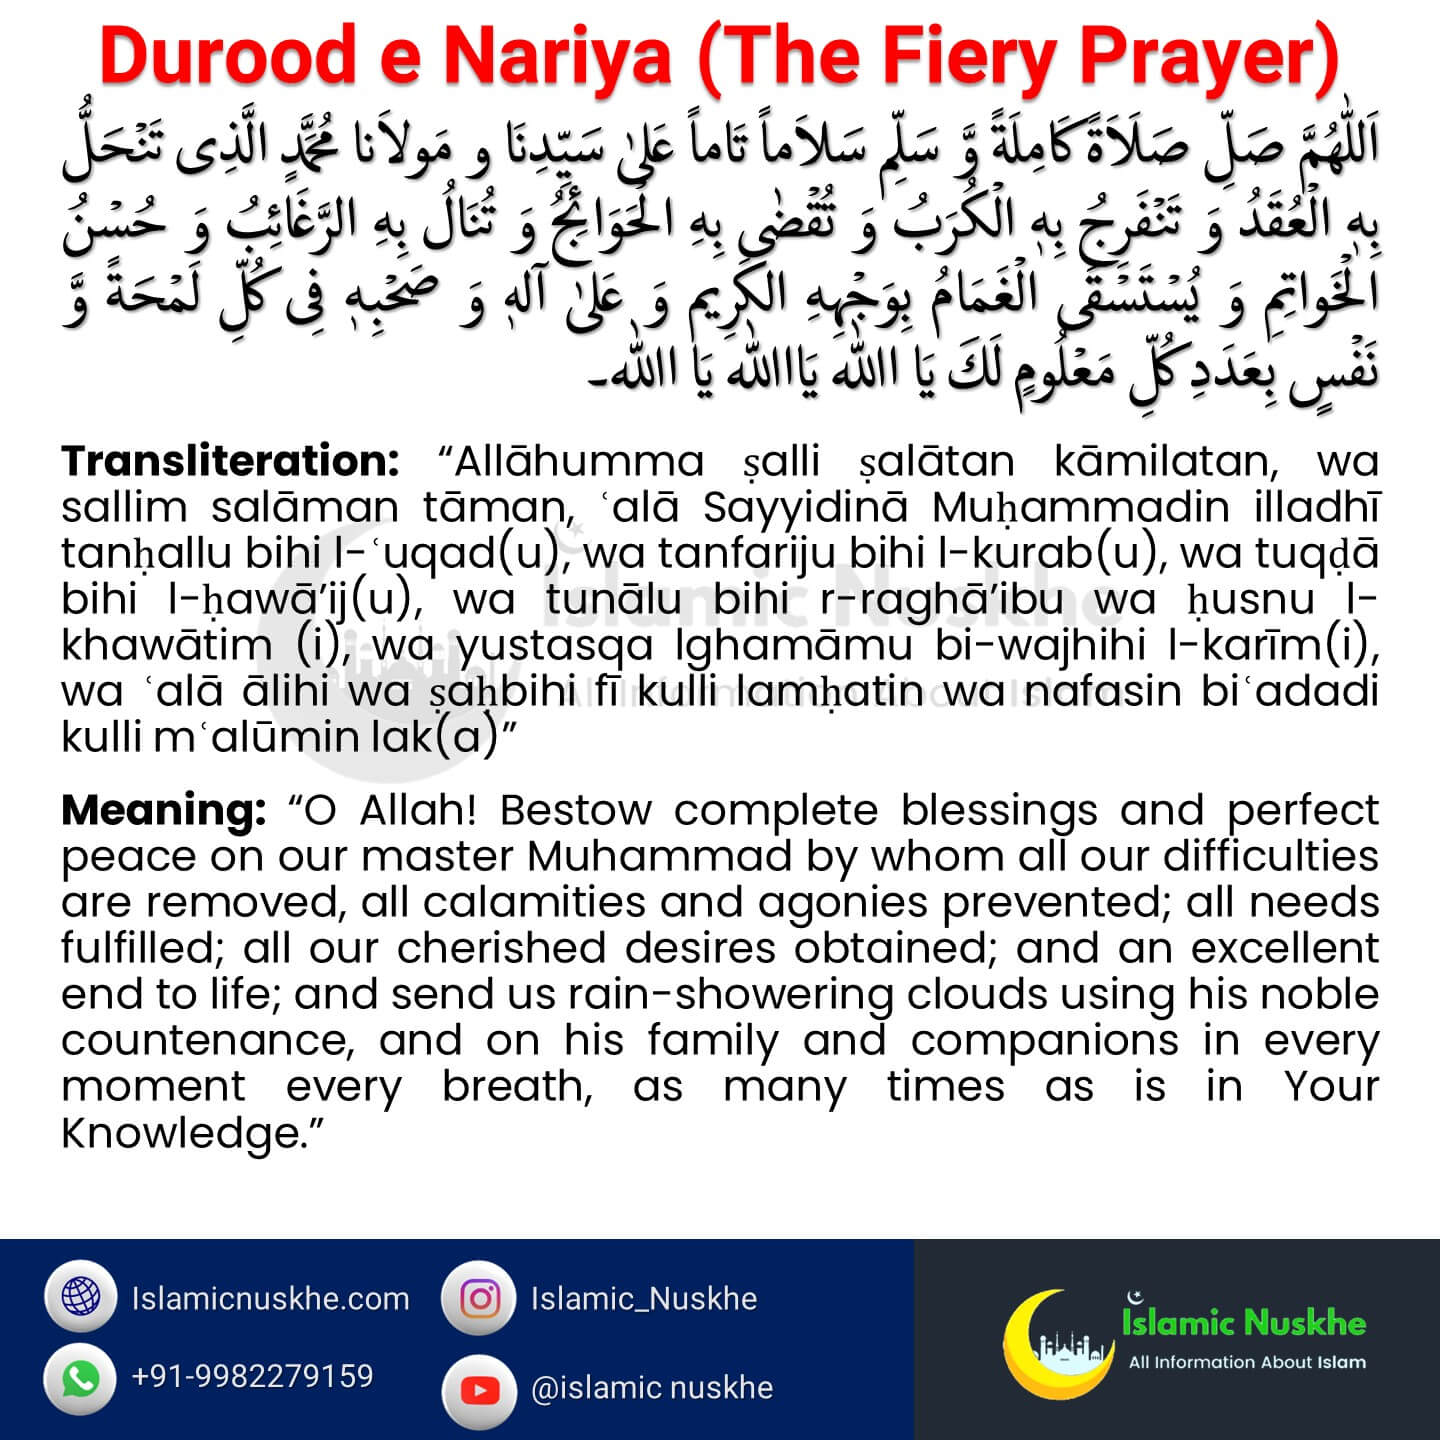 Durood e Nariya (The Fiery Prayer)